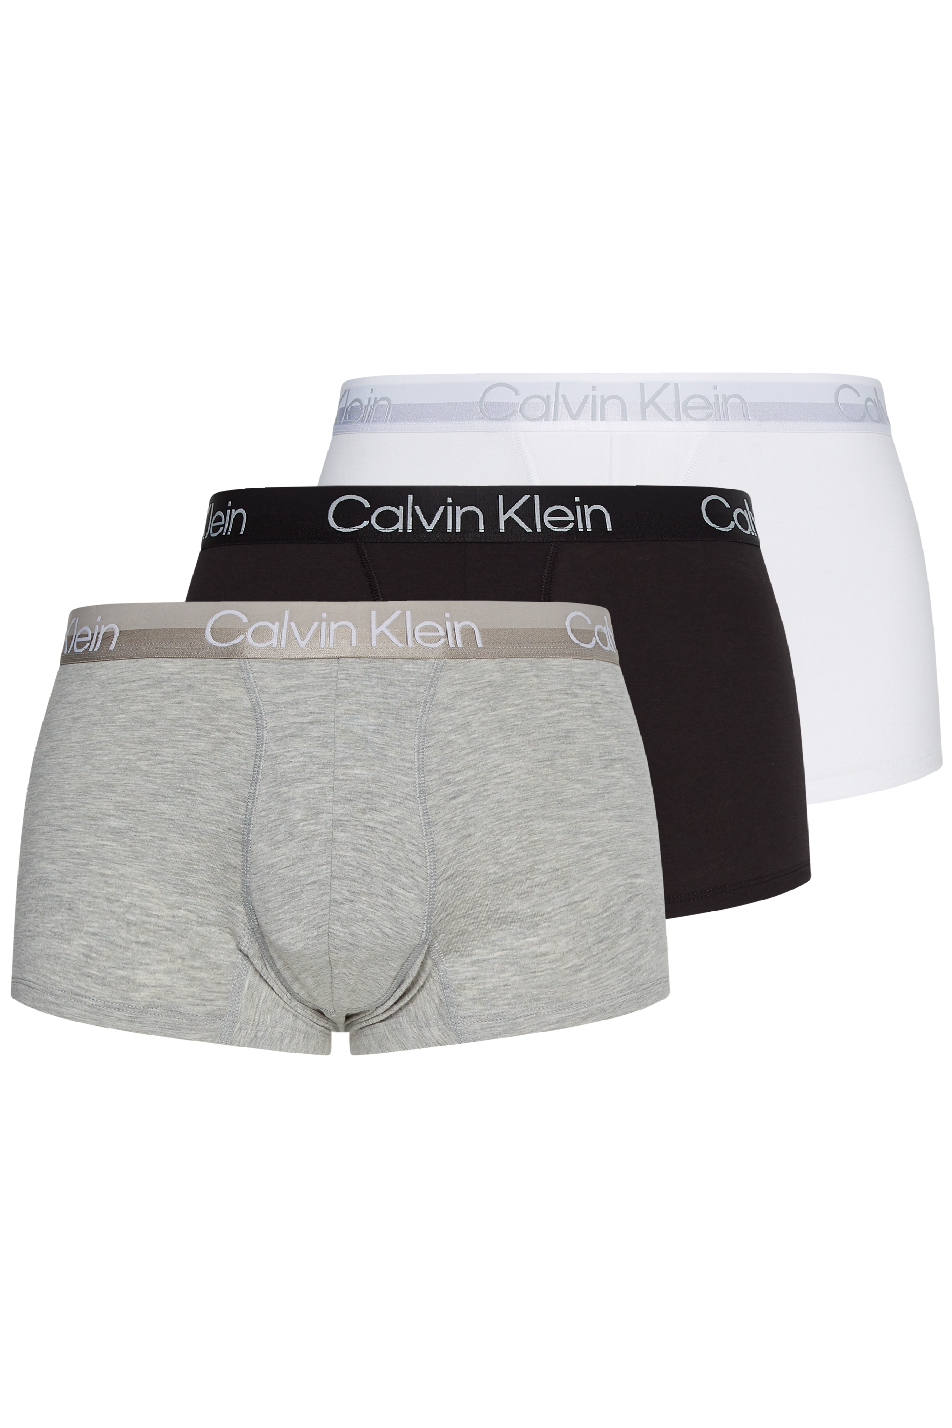 Calvin Klein 3 Pack Men's Modern Structure Trunk